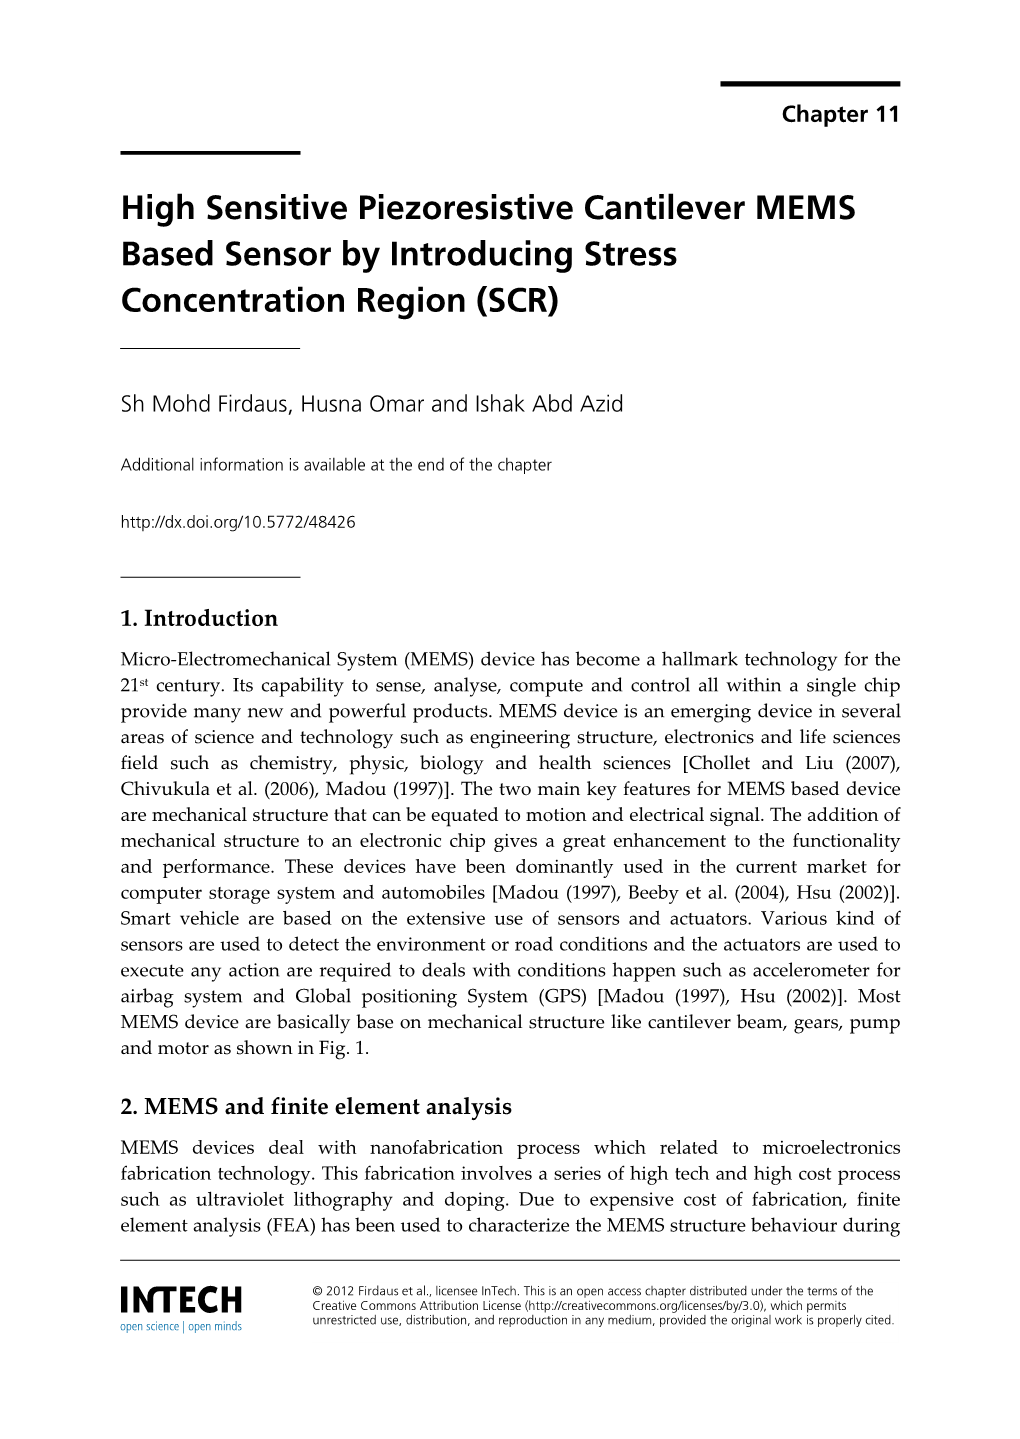 High Sensitive Piezoresistive Cantilever MEMS Based Sensor by Introducing Stress Concentration Region (SCR)